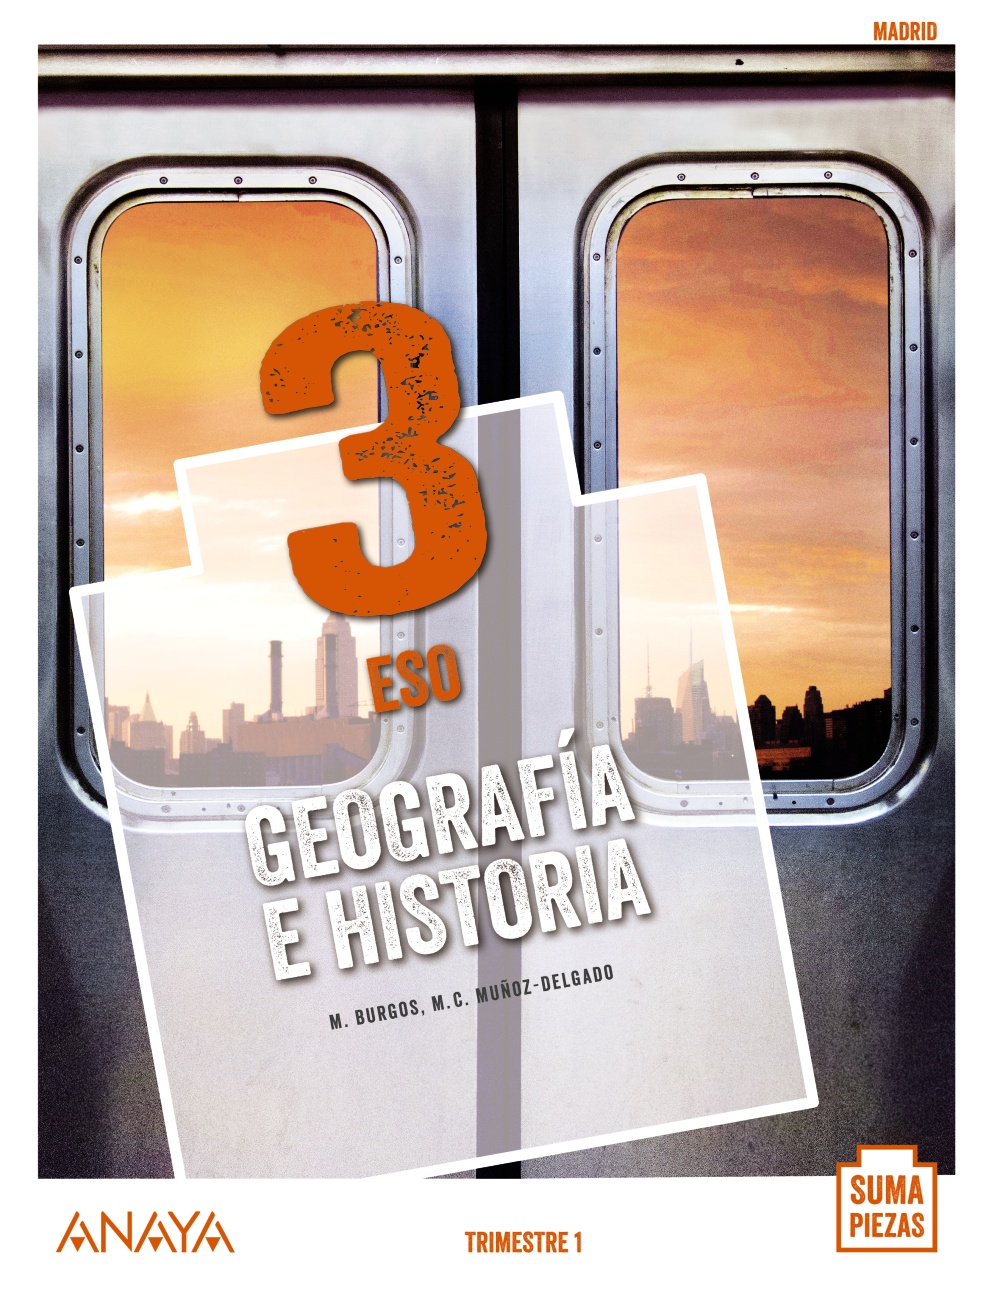 Solucionario Geografia e Historia 3 ESO Anaya Suma Piezas-pdf